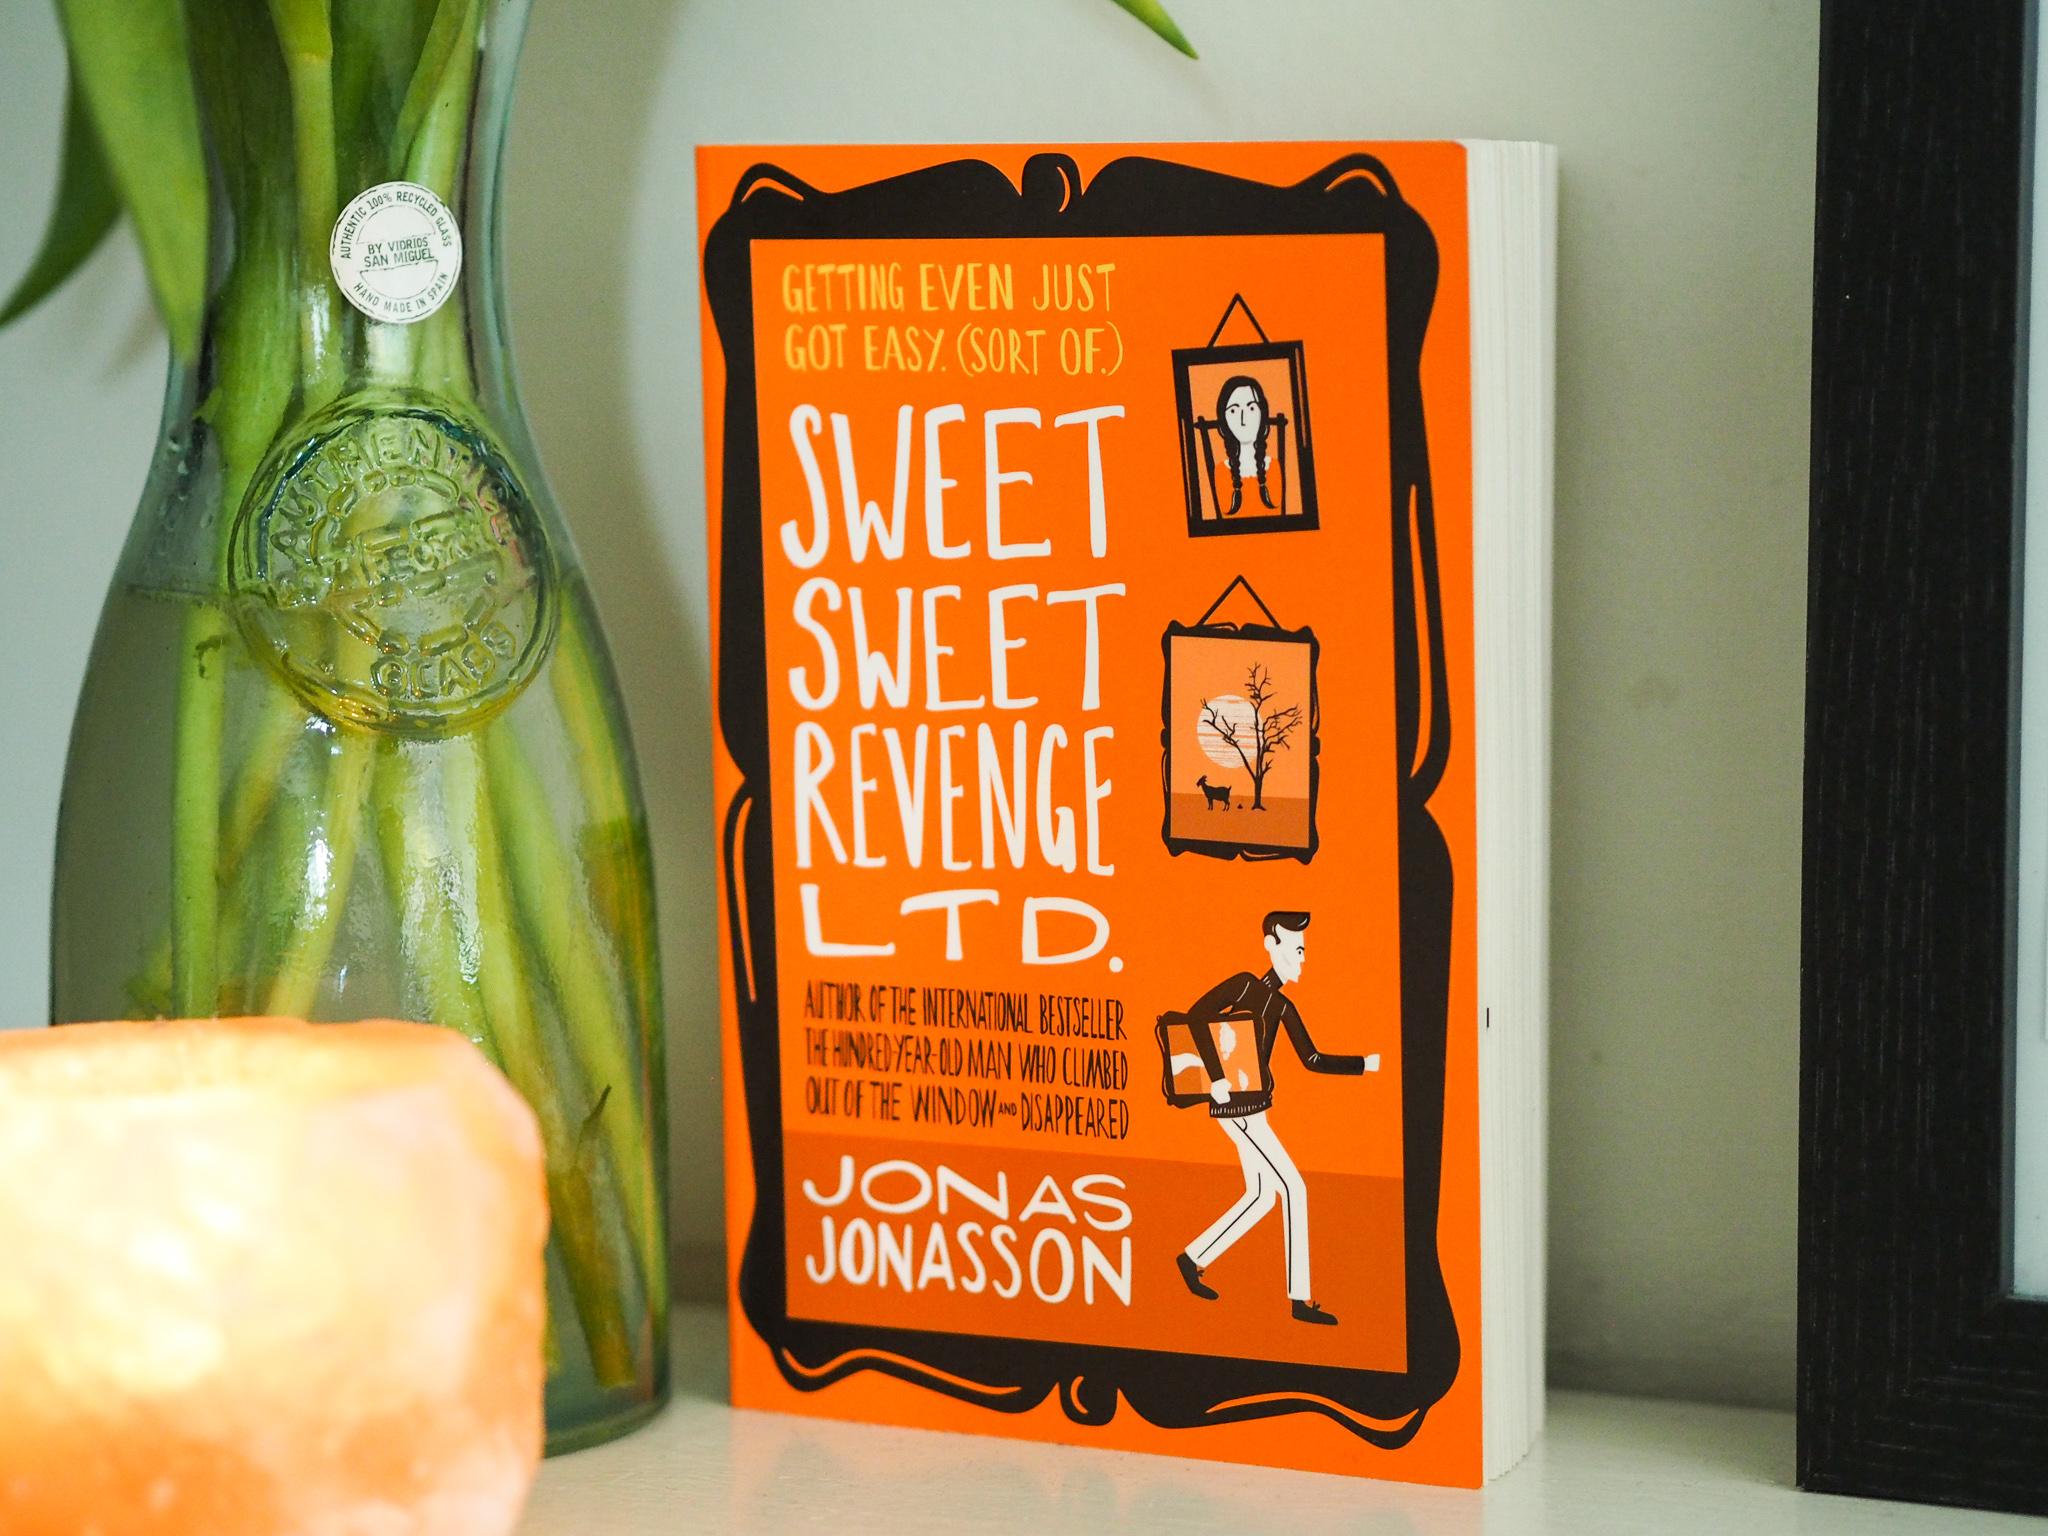 Books: Jonas Jonasson - Sweet Sweet Revenge LTD. — A Little Peculiar